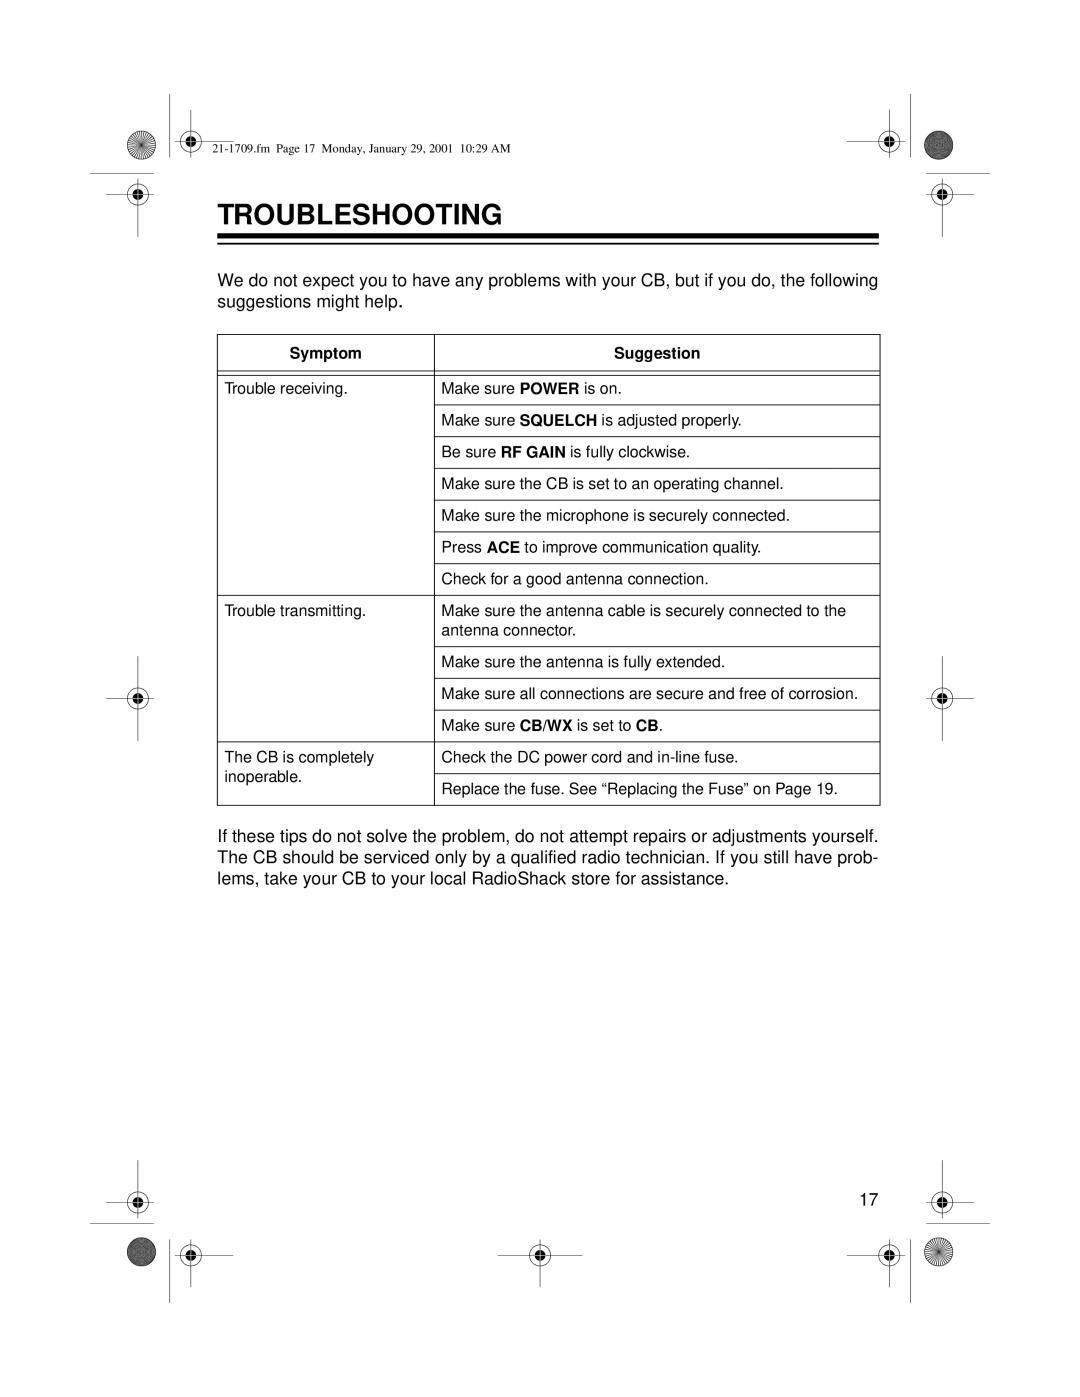 Radio Shack TRC-519 owner manual Troubleshooting, Symptom Suggestion 